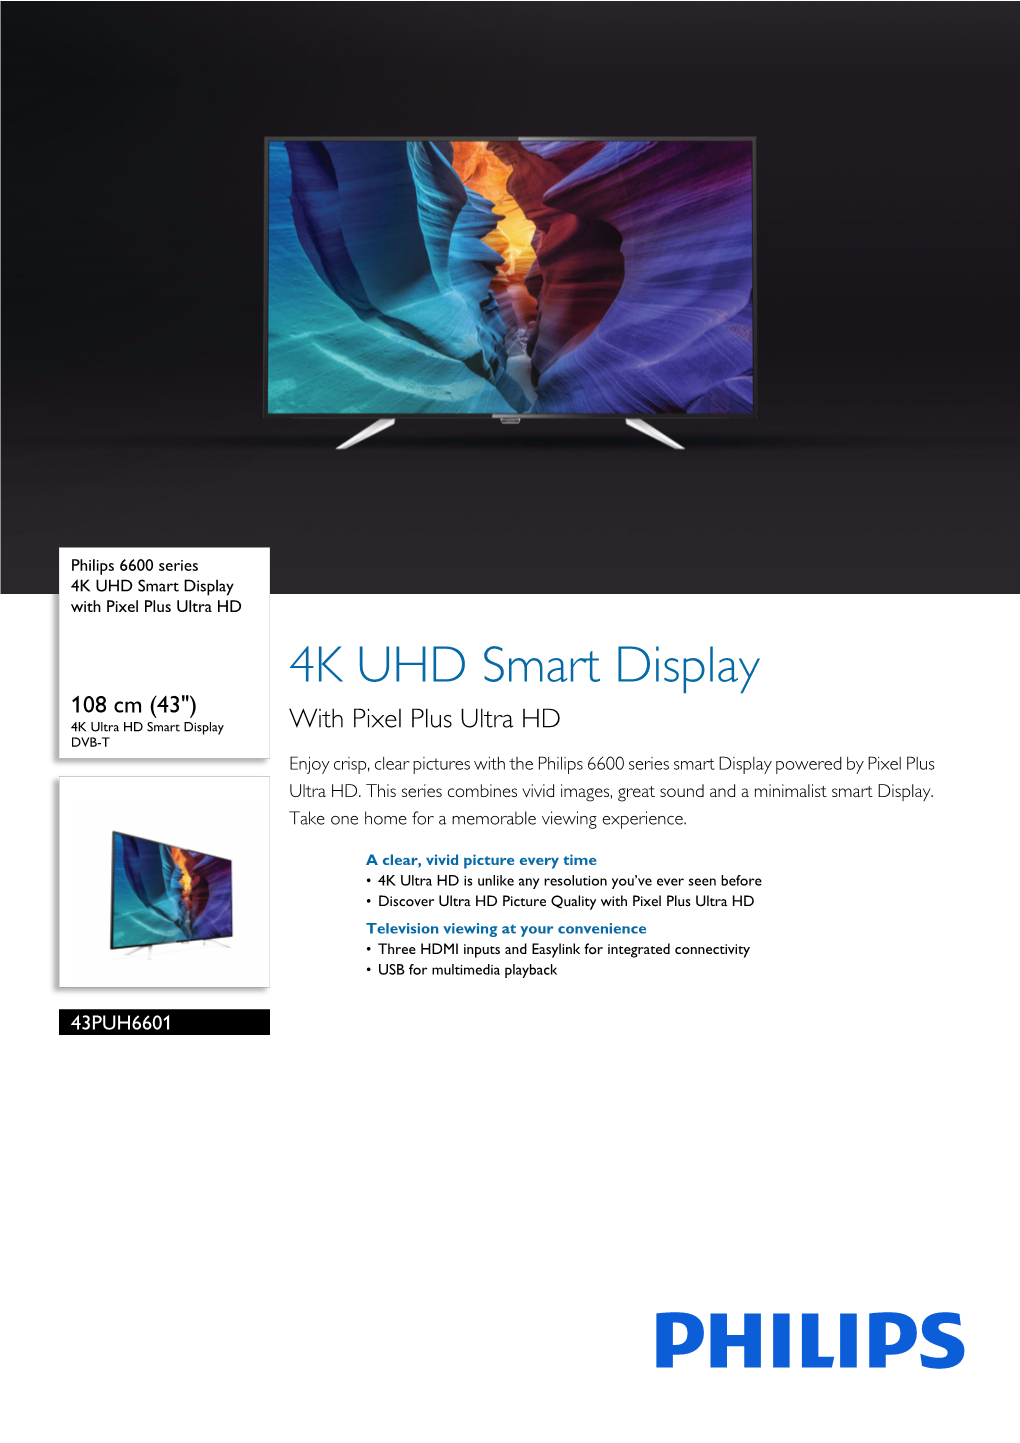 43PUH6601/96 Philips 4K UHD Smart Display with Pixel Plus Ultra HD